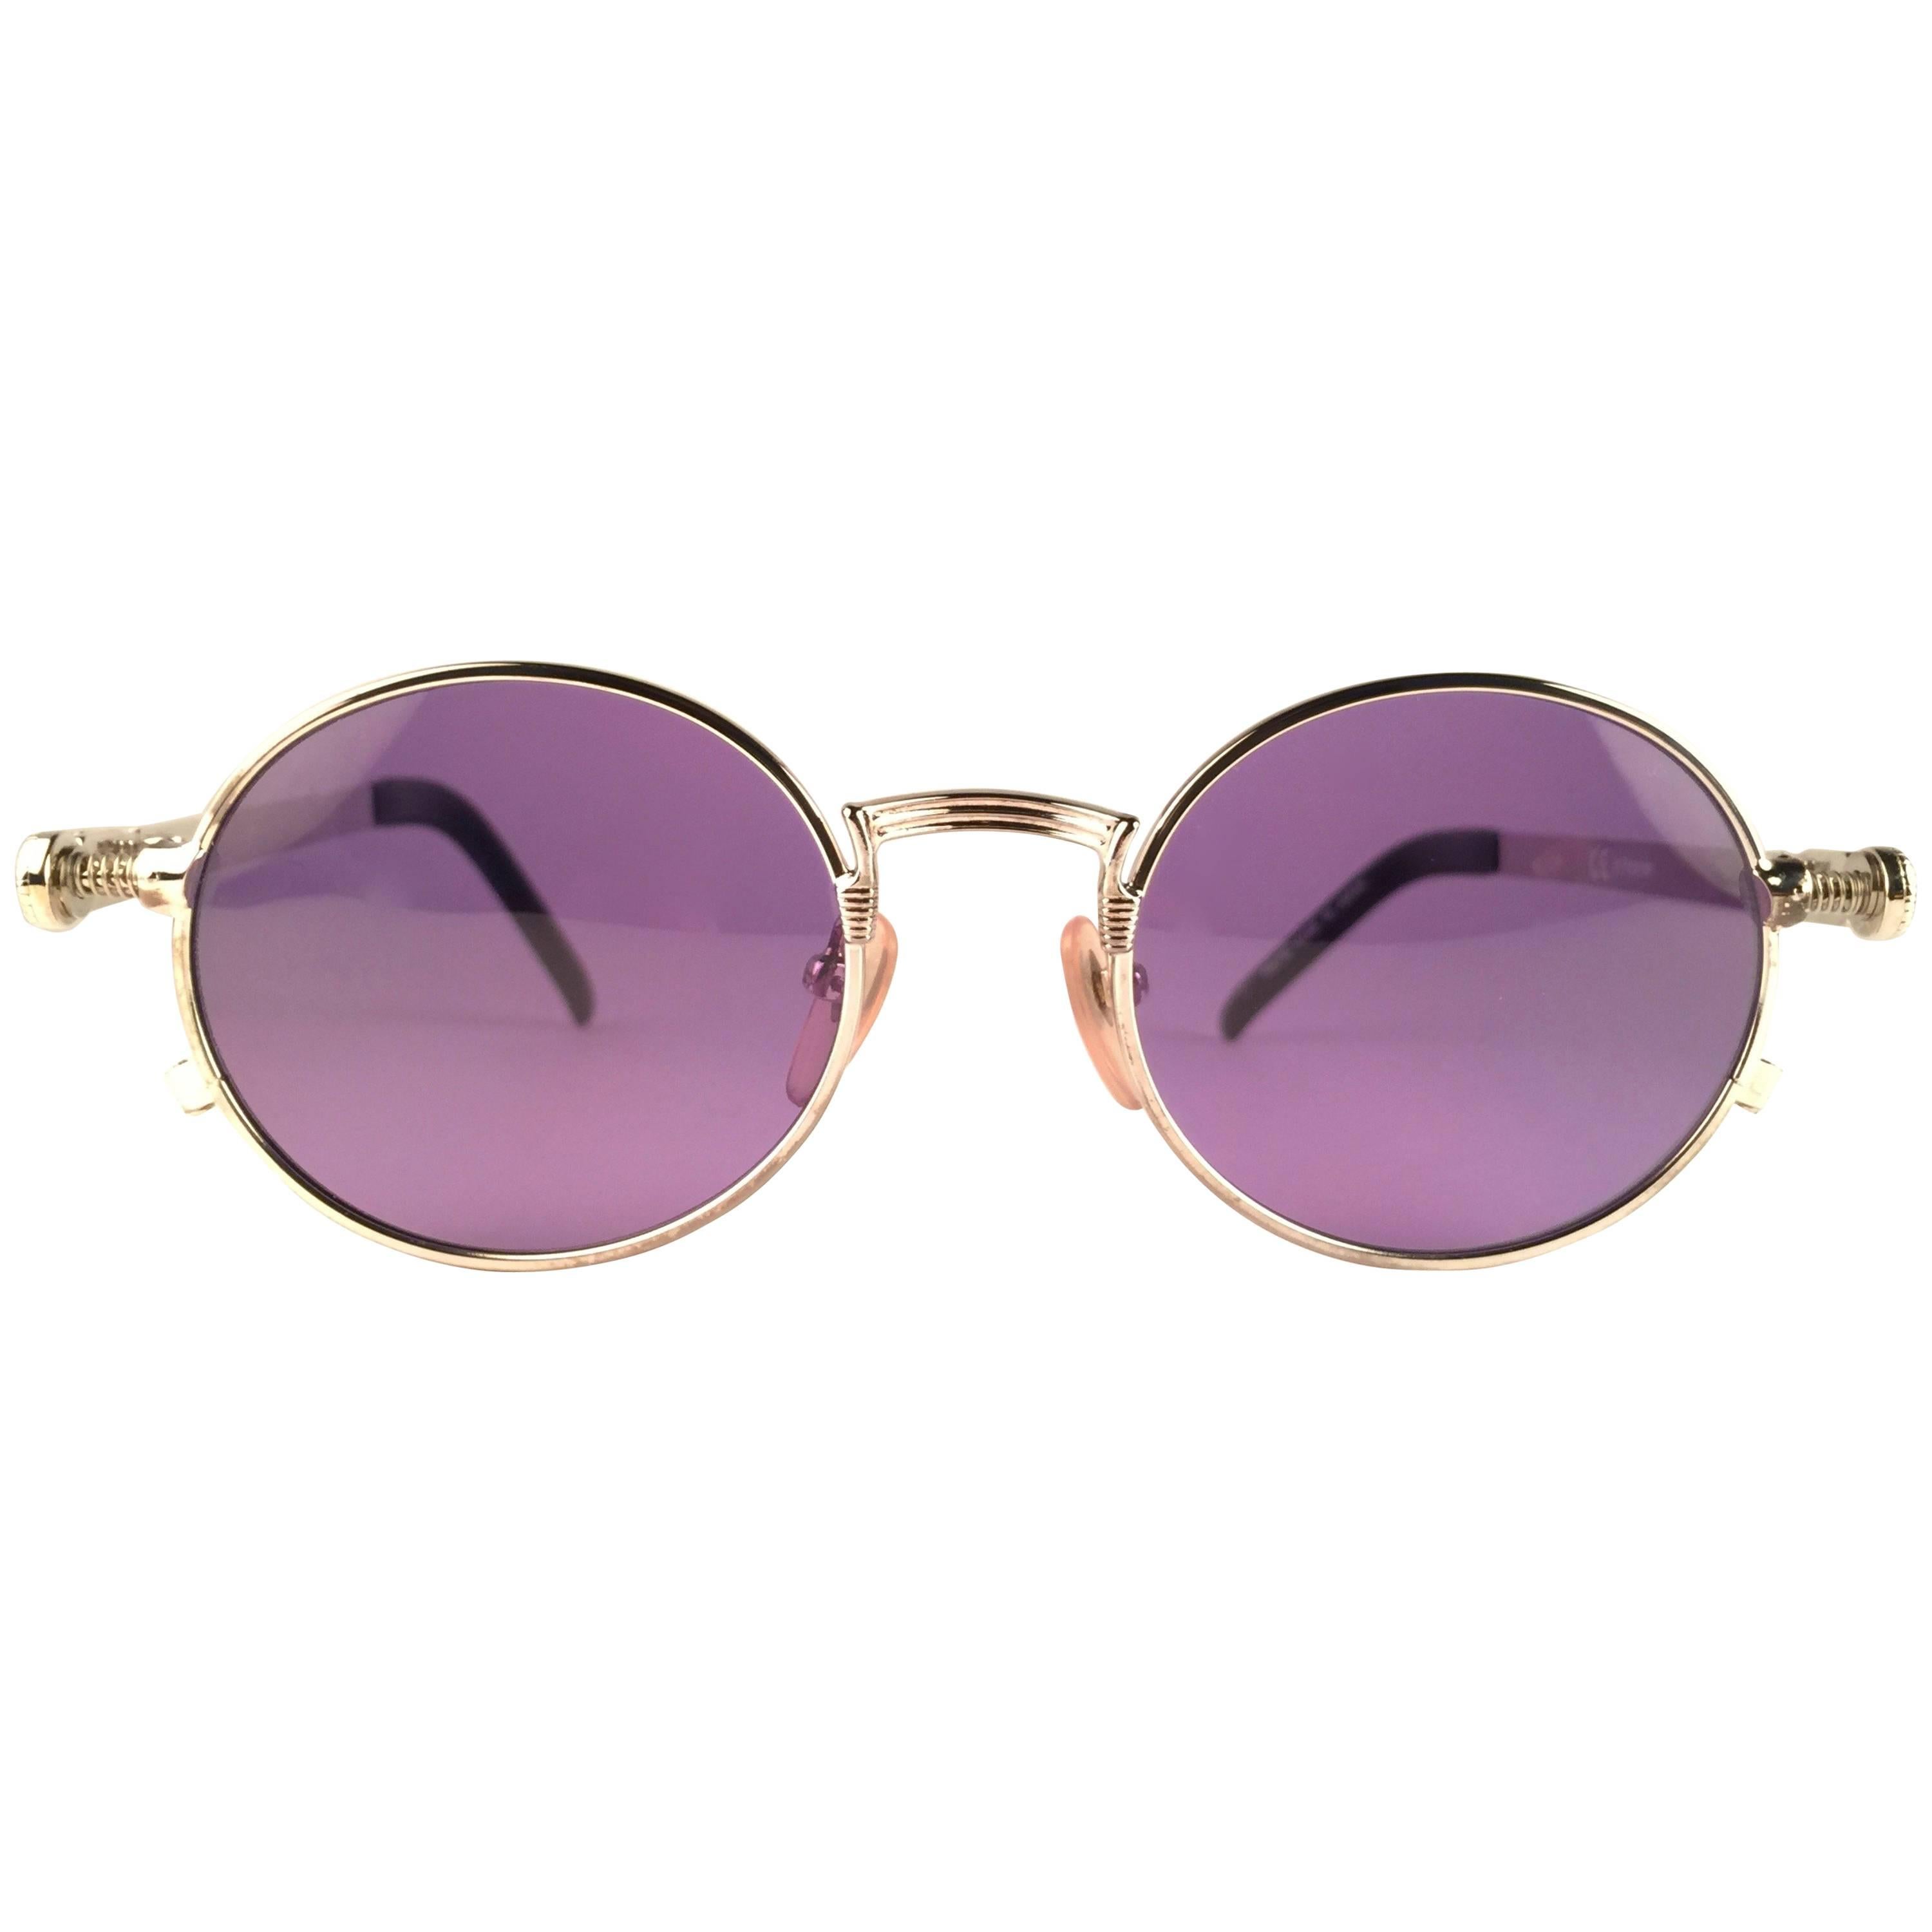 New Jean Paul Gaultier 56 4178 Round Silver Dark Purple Sunglasses 1990's Japan